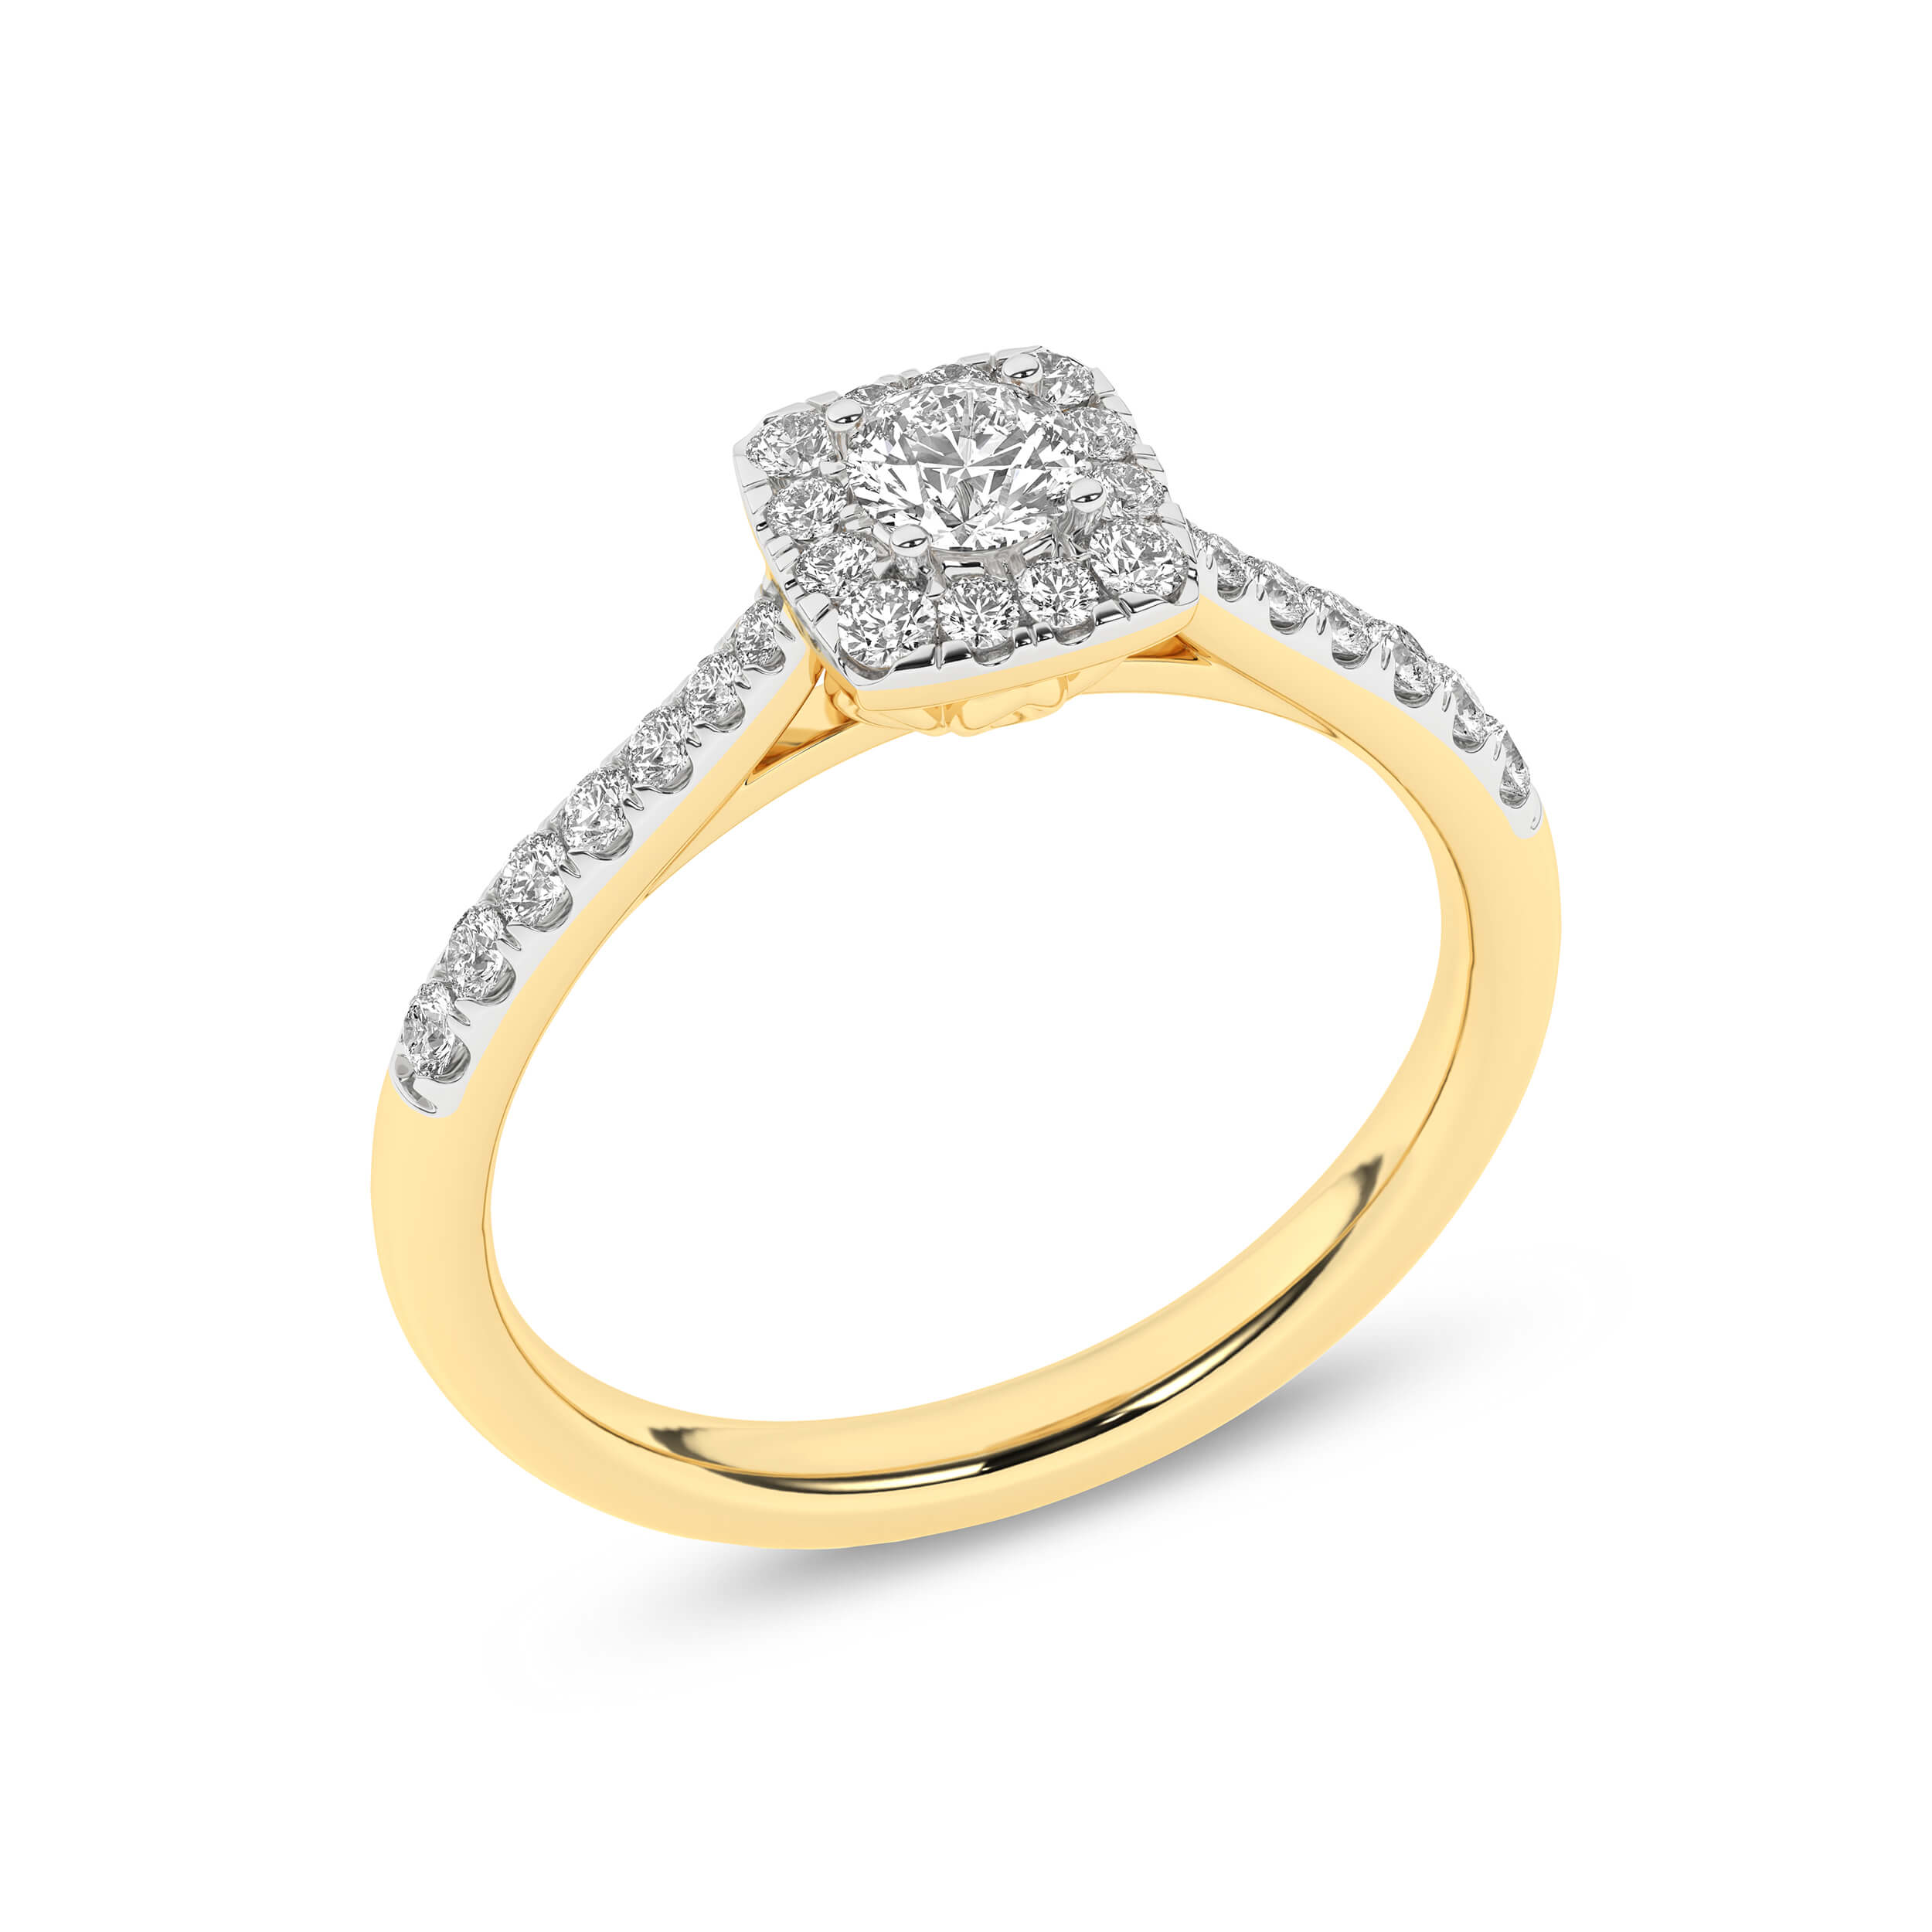 Inel de logodna din Aur Galben 14K cu Diamante 0.50Ct, articol RB17645EG, previzualizare foto 4